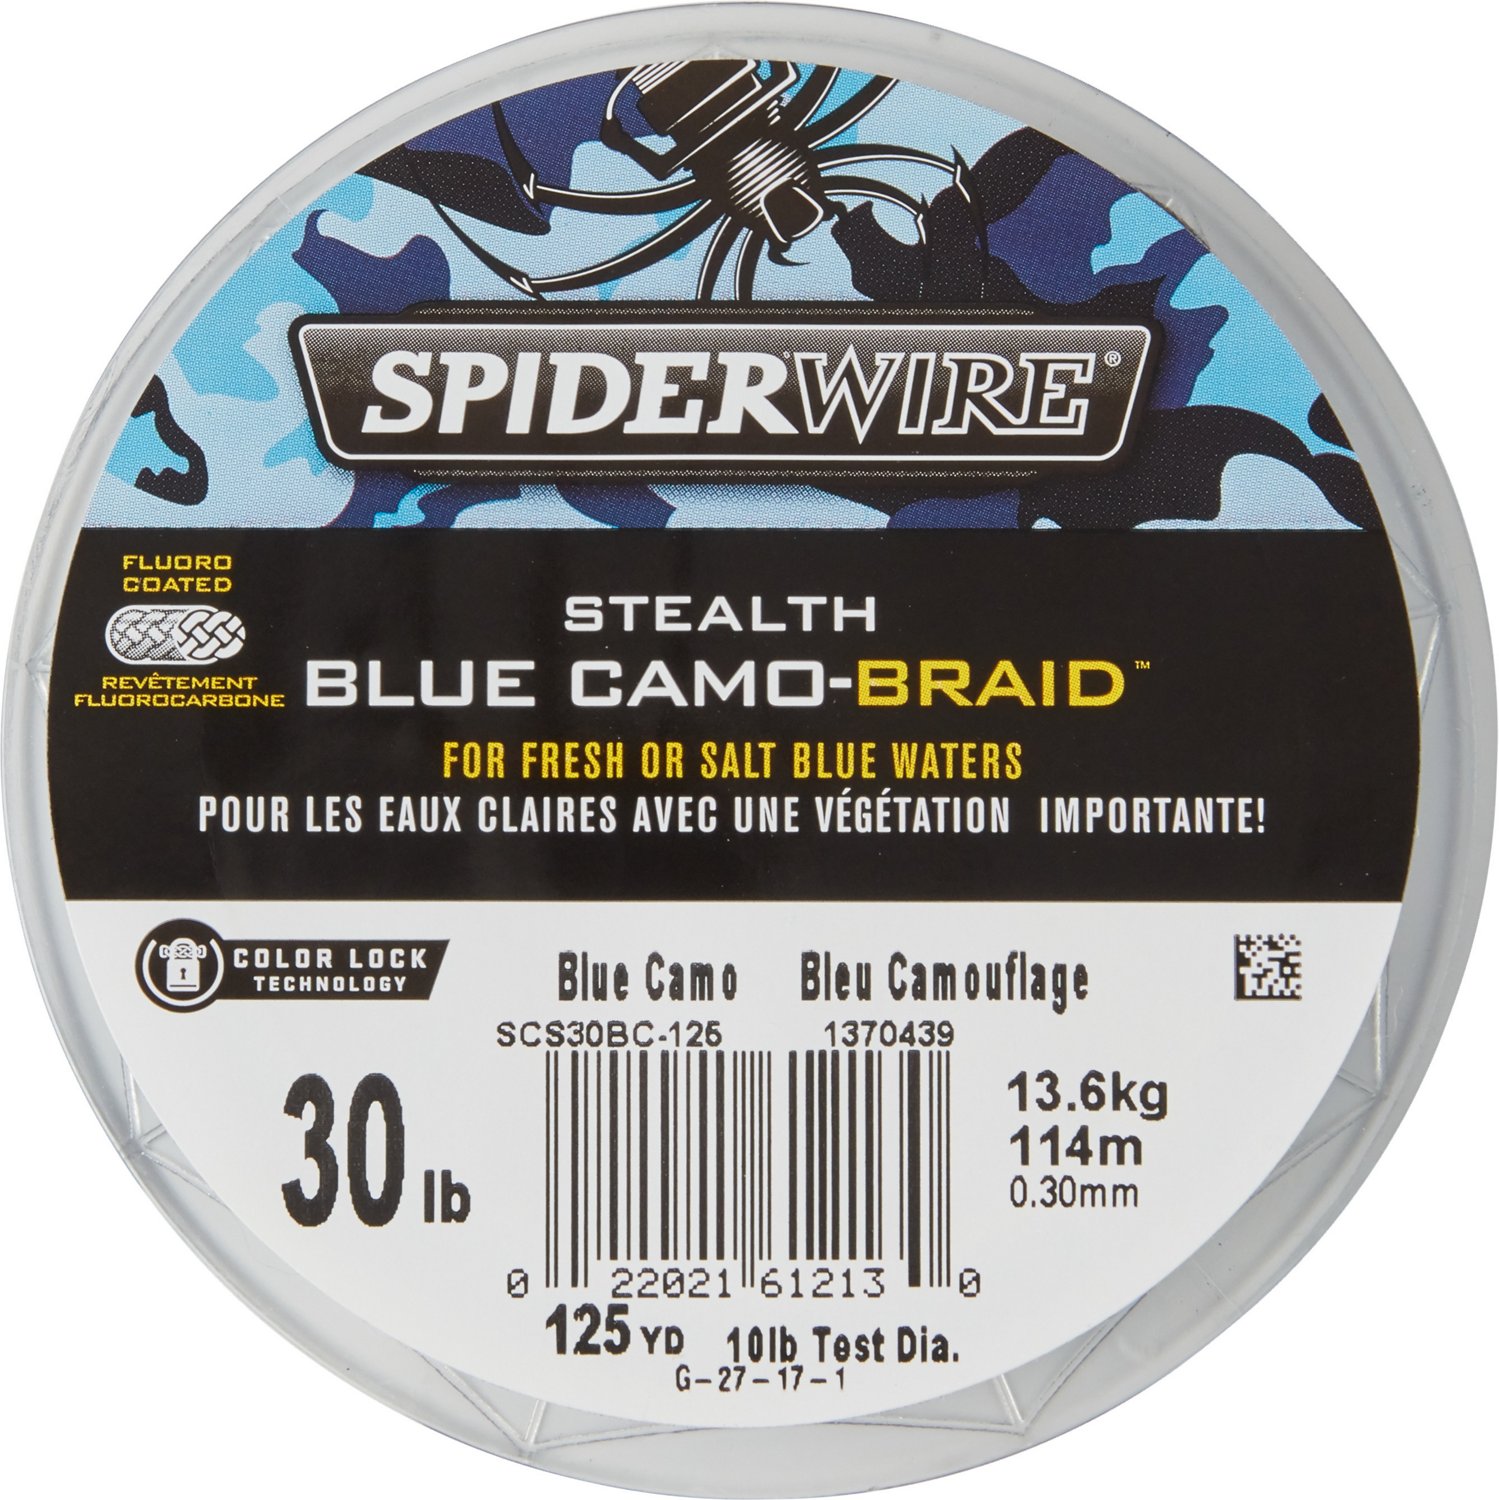 Spiderwire Stealth Blue Camo-Braid - 125 yards Braided Fishing